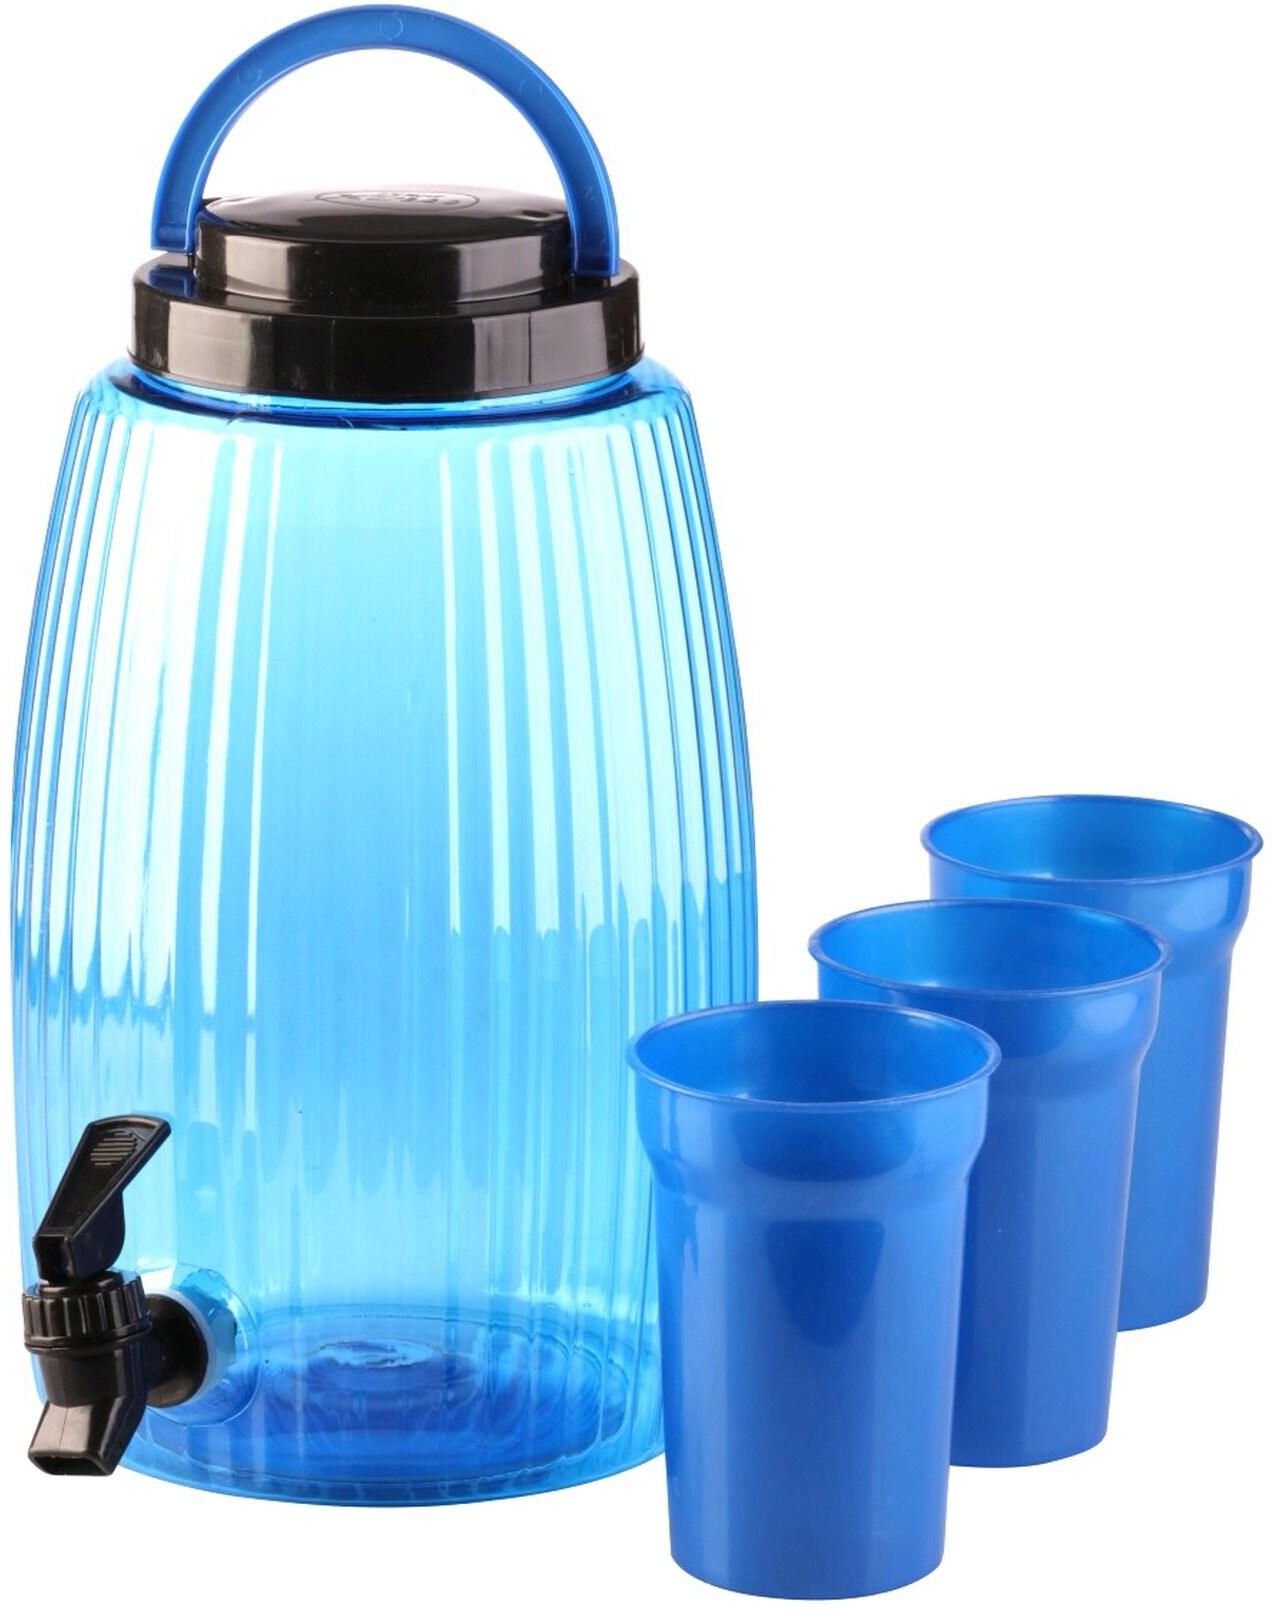 Max Plast Plastic Cooler Dispenser With Cups Blue And Black 4.7L 4 PCS